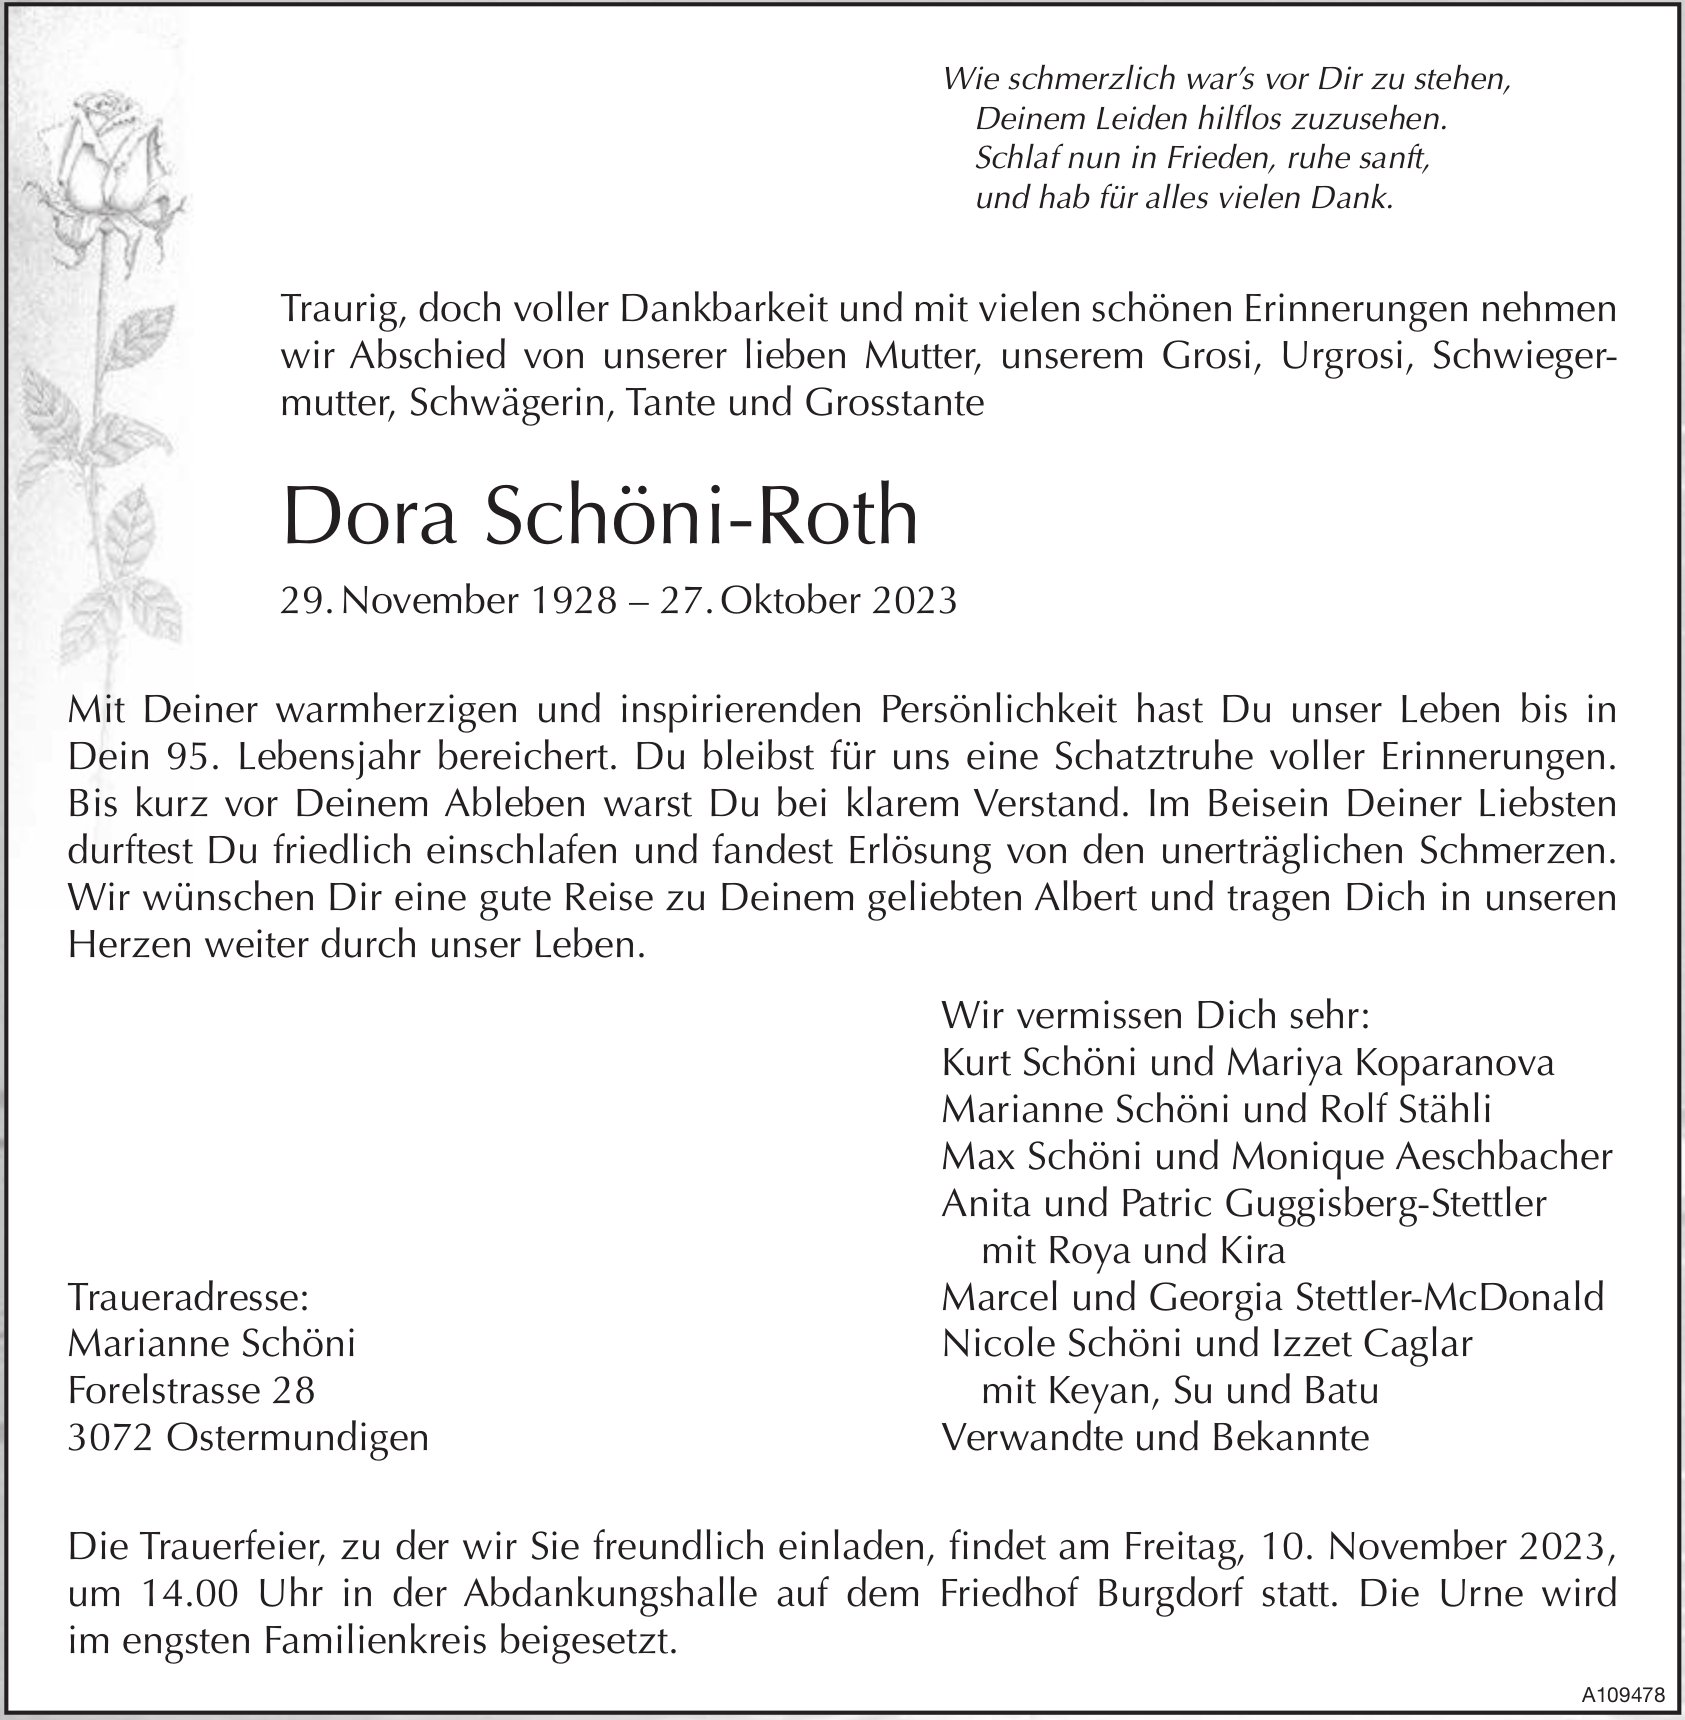 Dora Schöni-Roth, Oktober 2023 / TA